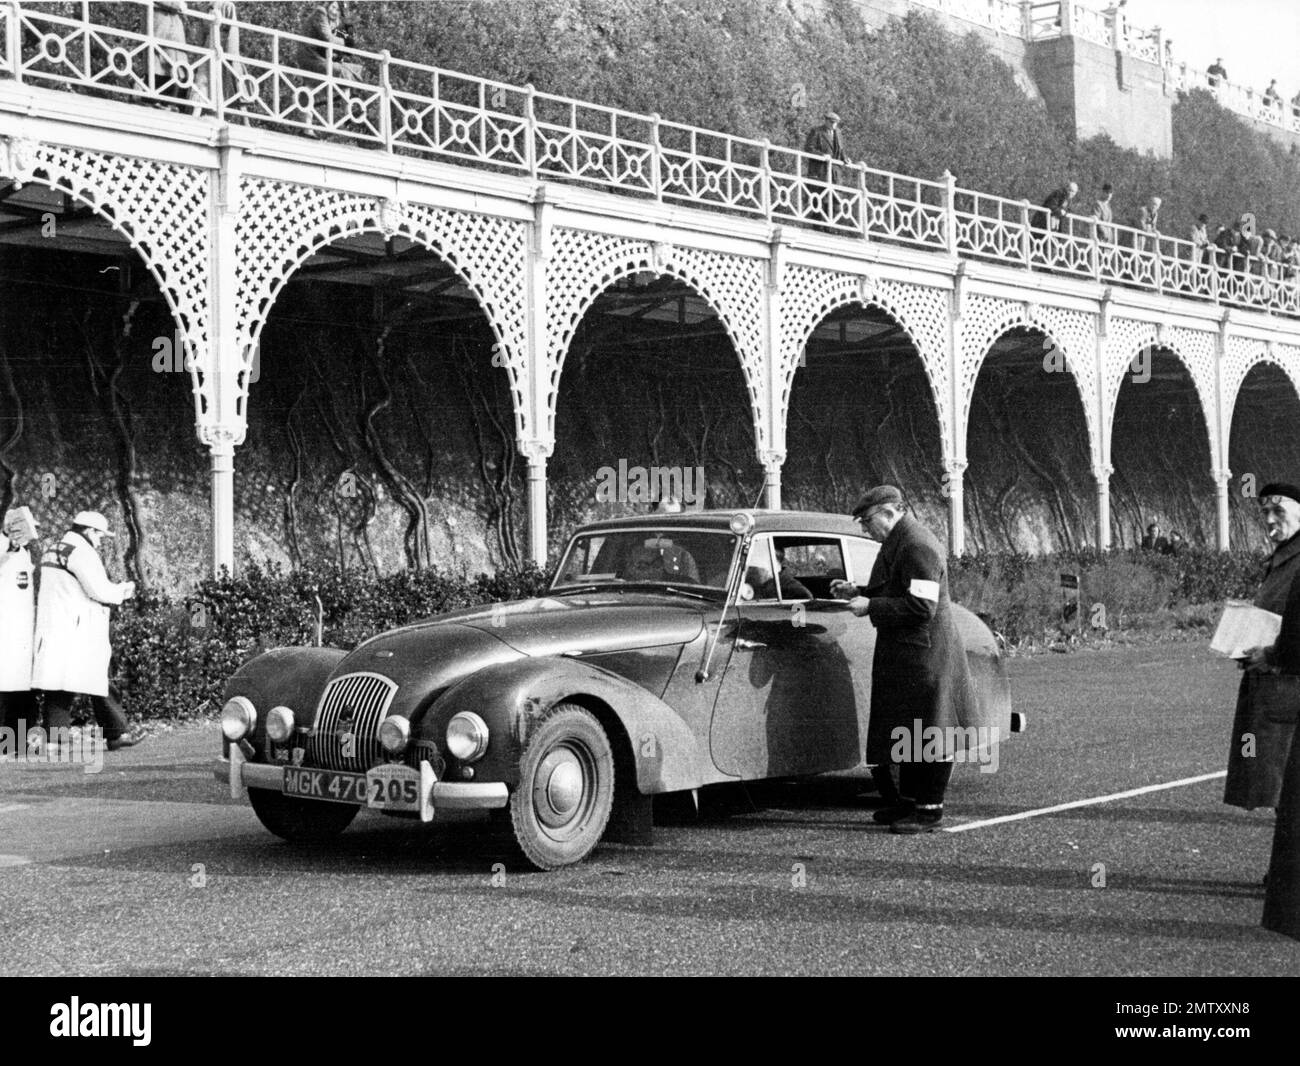 Saloon Allard P1 1952. Rallye express quotidien 14/11/1952 .CD1643 Banque D'Images